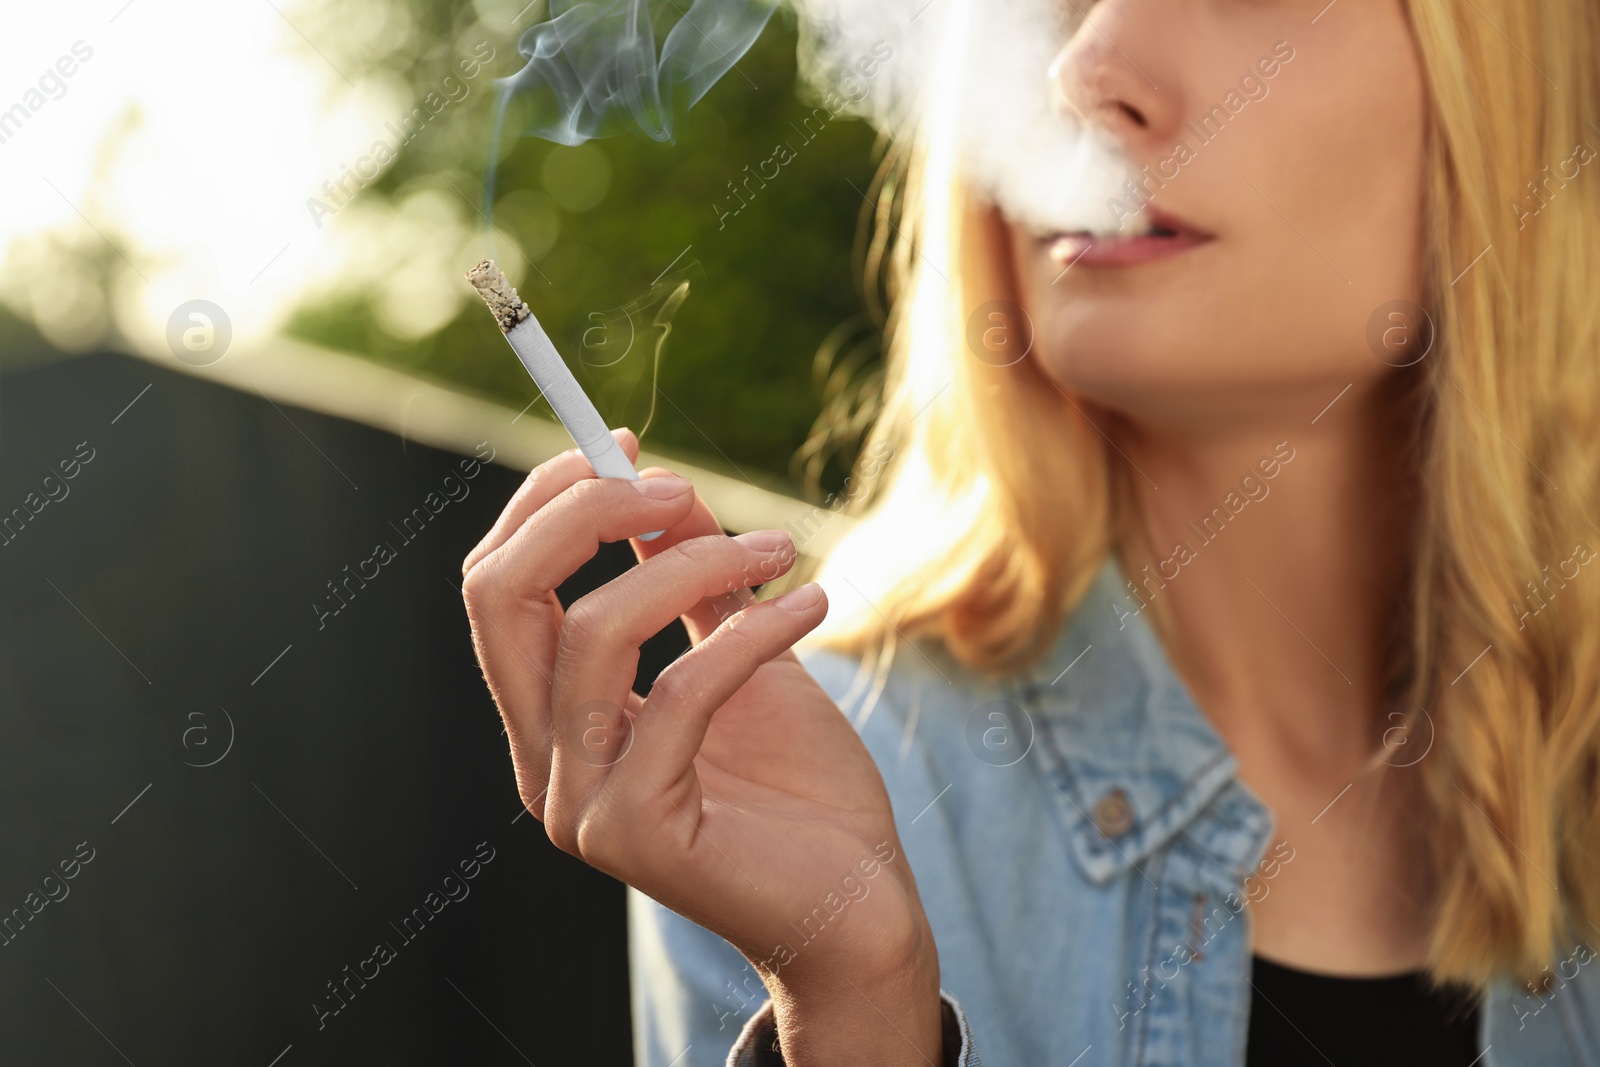 Photo of Young woman smoking cigarette outdoors, closeup view